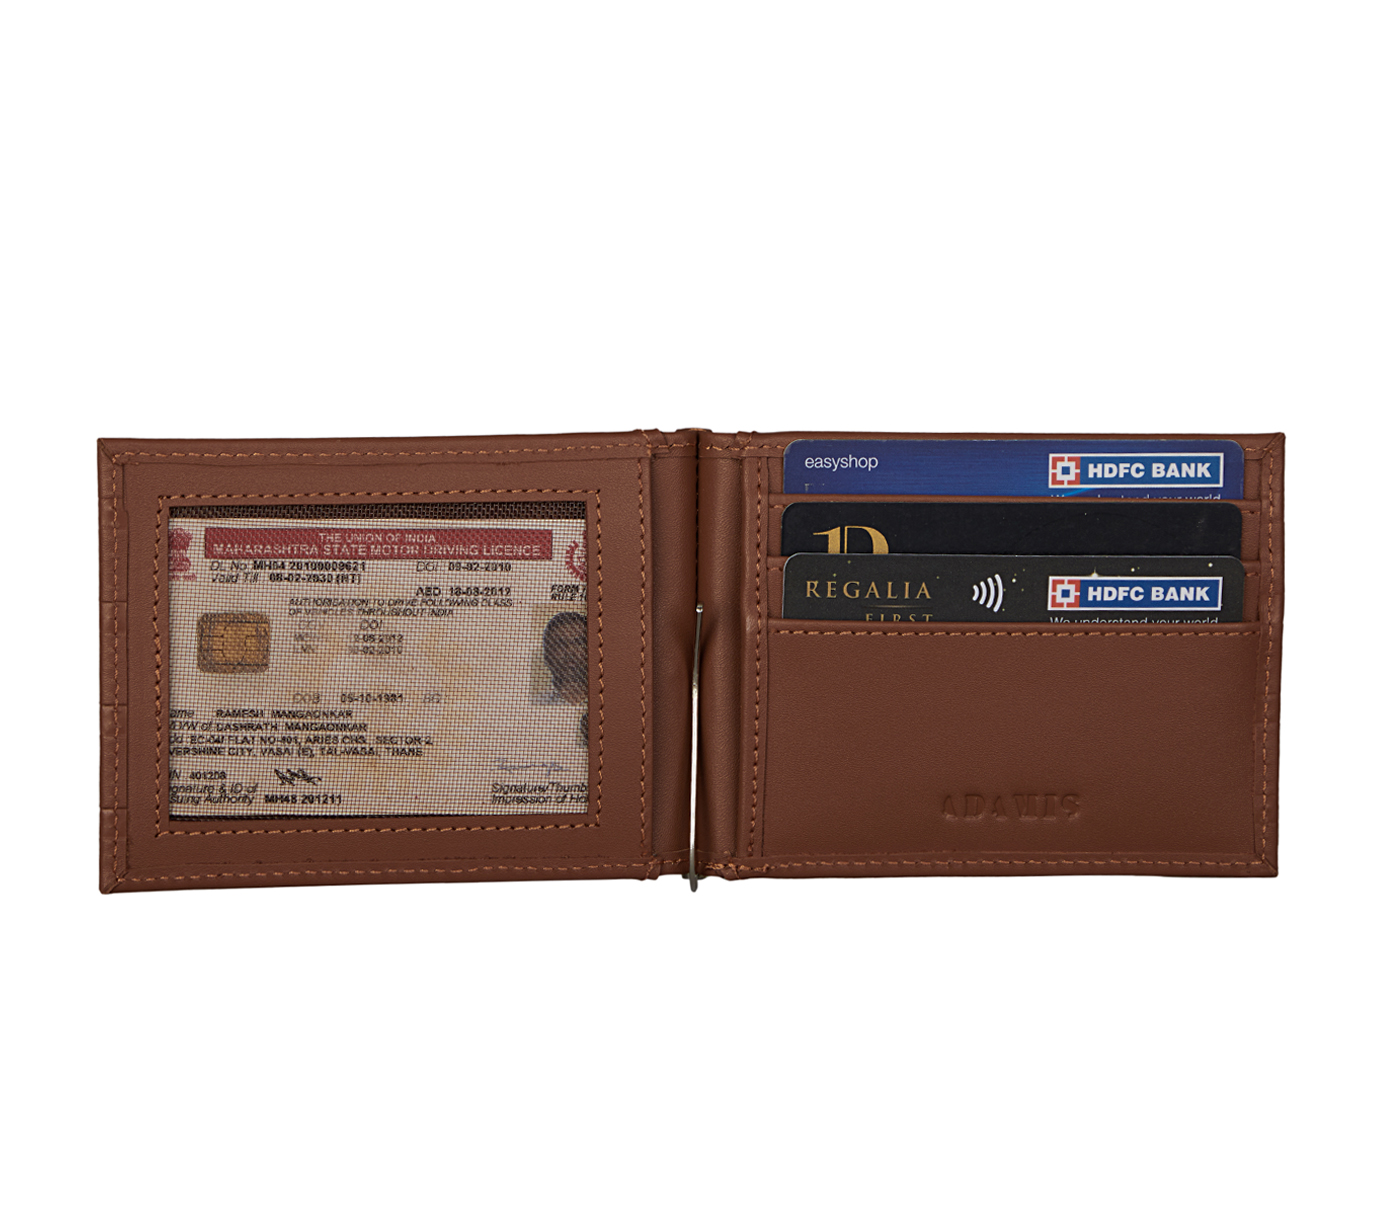 Wallet-Carl-Men's money clip cum card case wallet in Genuine Leather - Tan